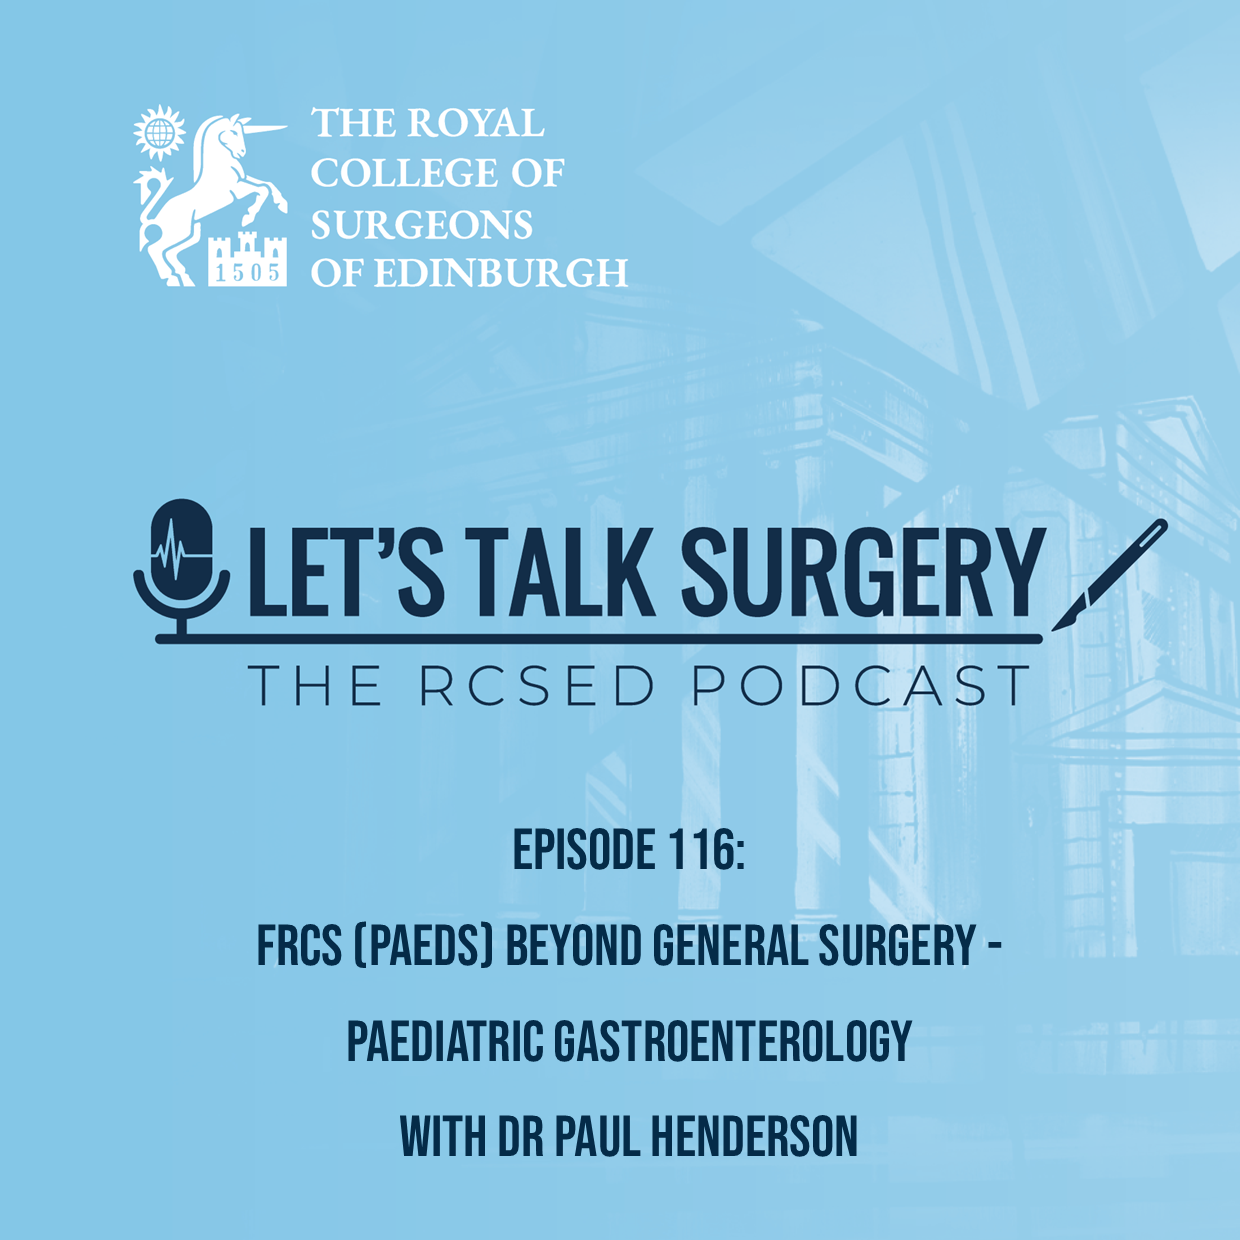 FRCS (Paeds) Beyond General Surgery - Paediatric Gastroenterology with Dr Paul Henderson